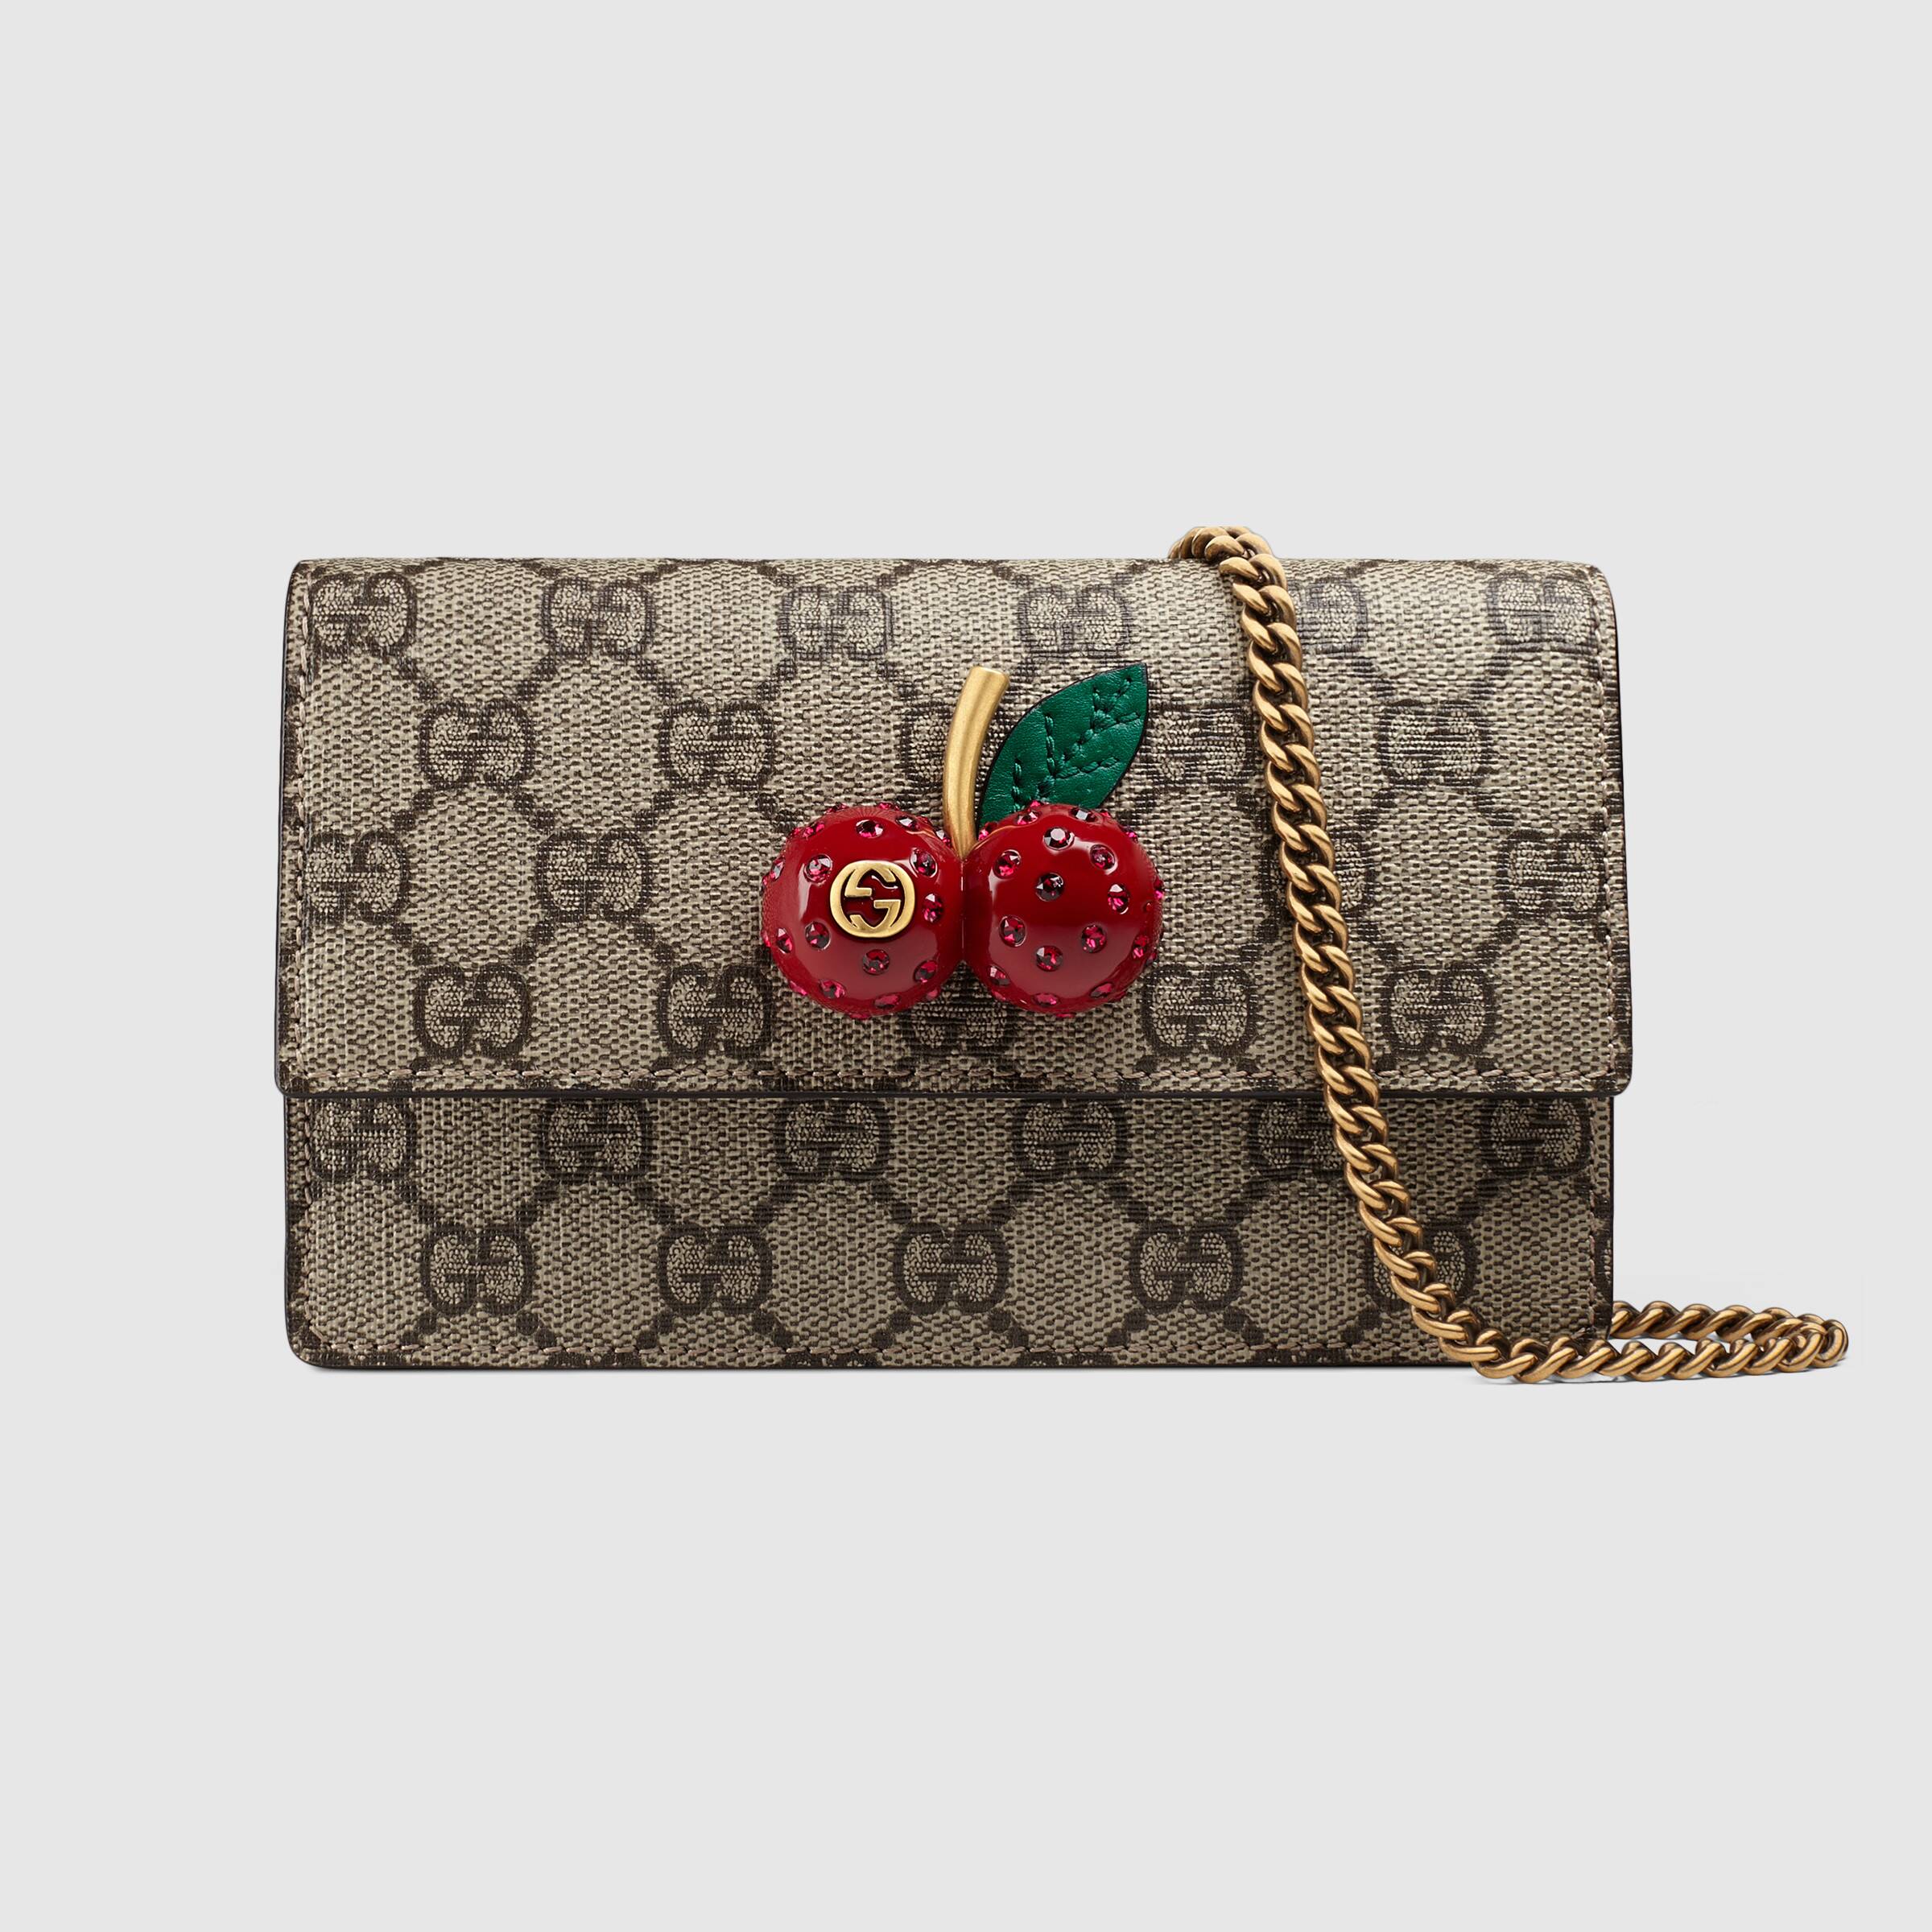 Gucci GG Supreme Mini Bag with Cherries